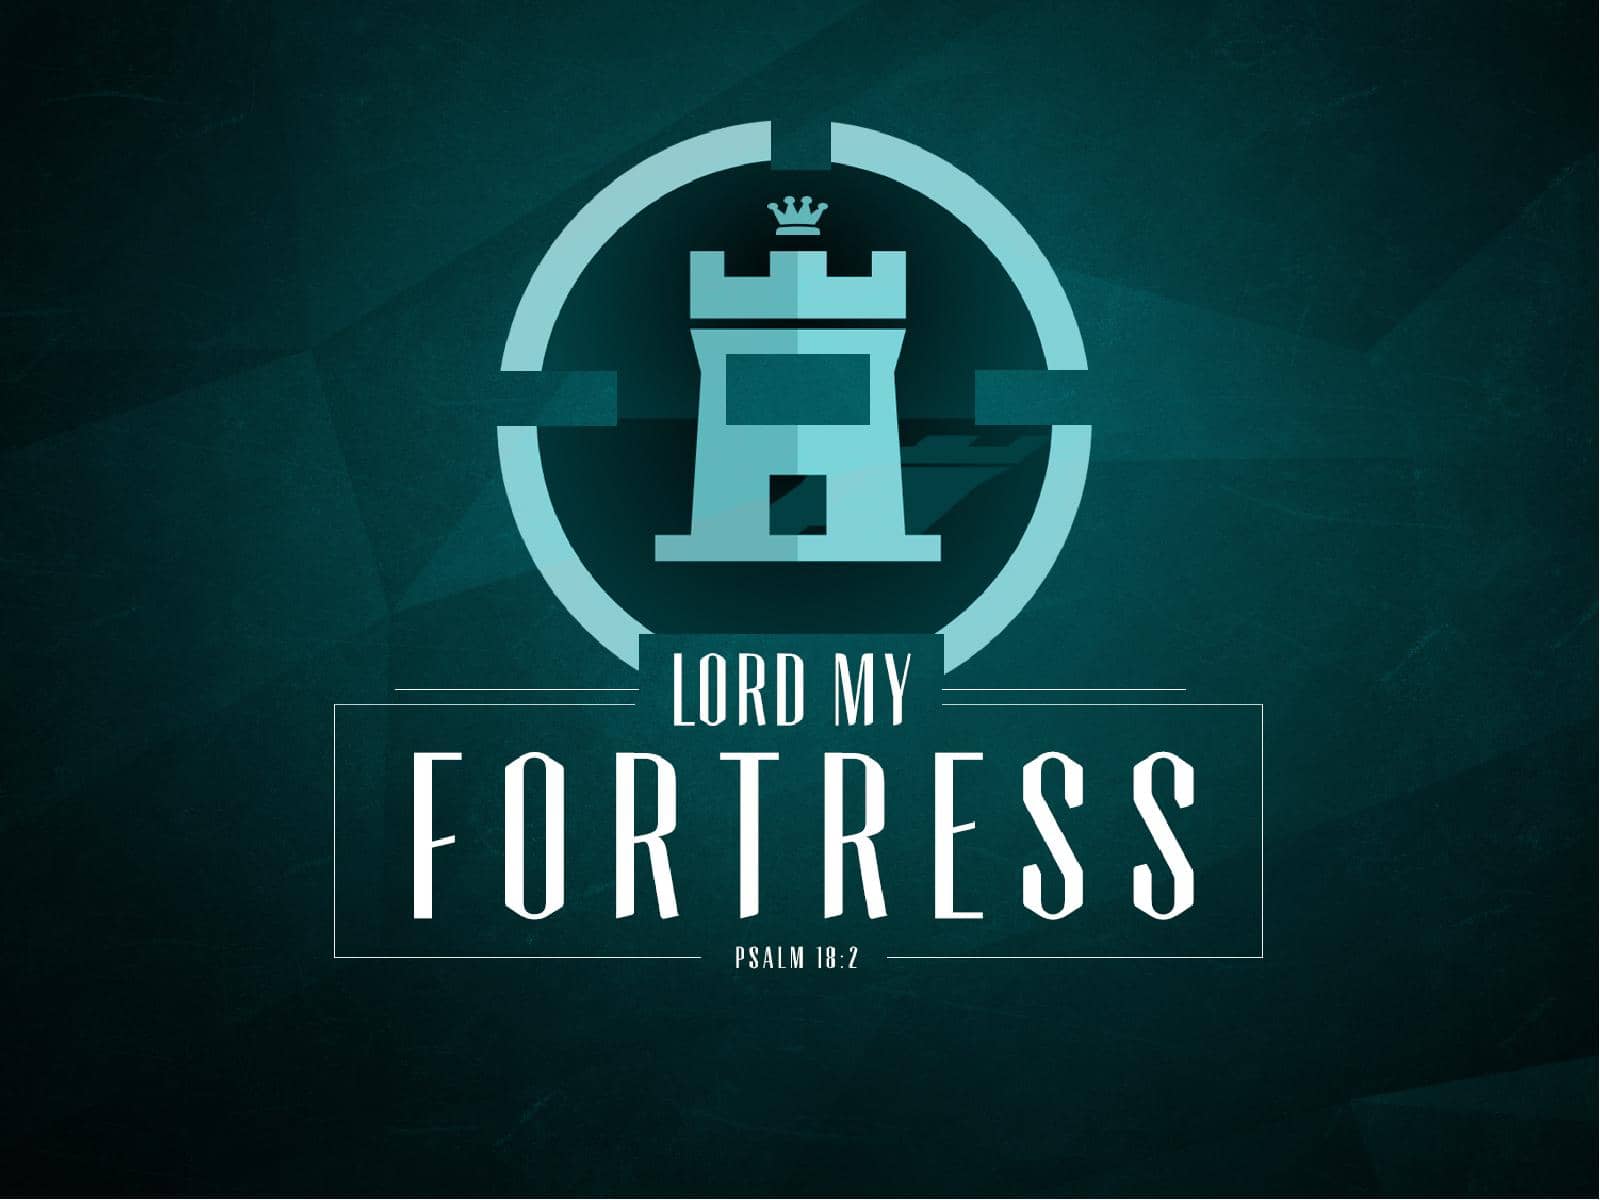 ShareFaith Media » Psalm 91 A Mighty Fortress is our God Sunday